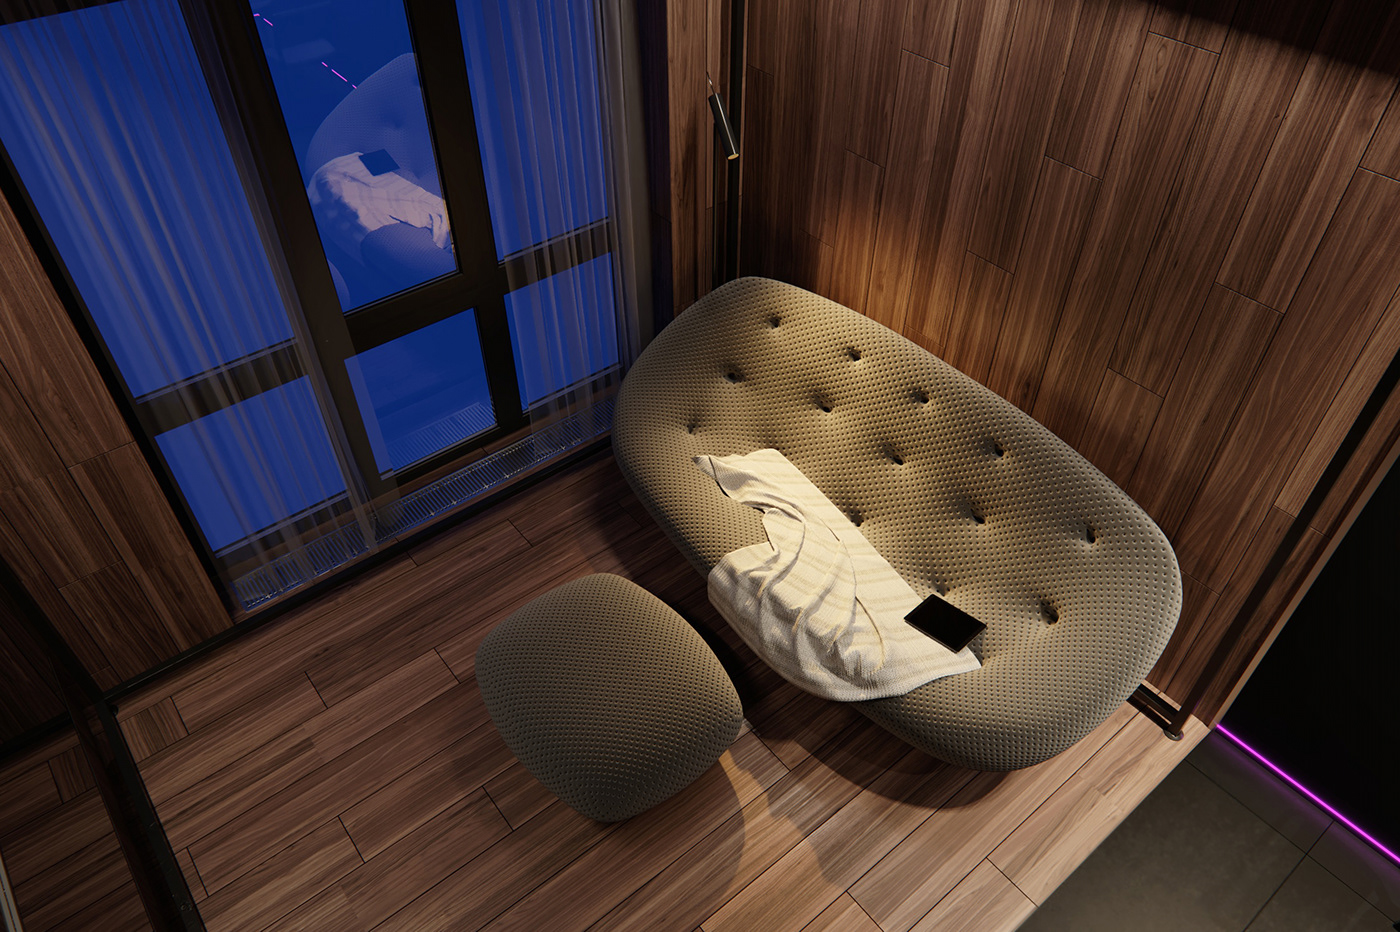 Interior design igor sirotov architecture wood bathroom bedroom kitchen dubai cea design